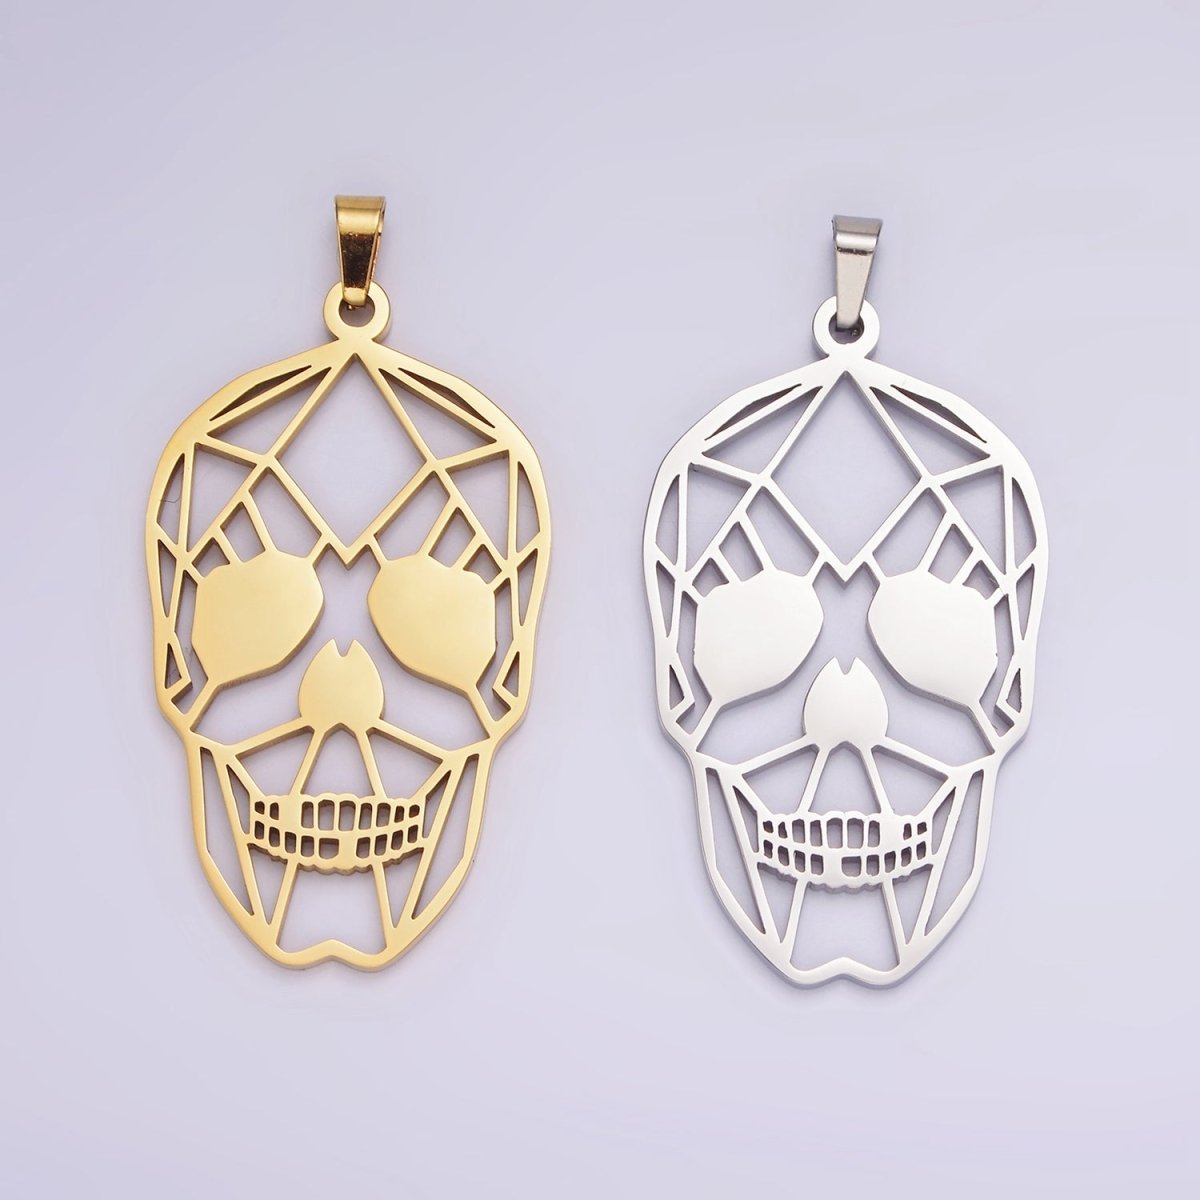 Stainless Steel 45mm Open Geometric Skeleton Skull Pendant in Gold & Silver | P-848 P-849 - DLUXCA